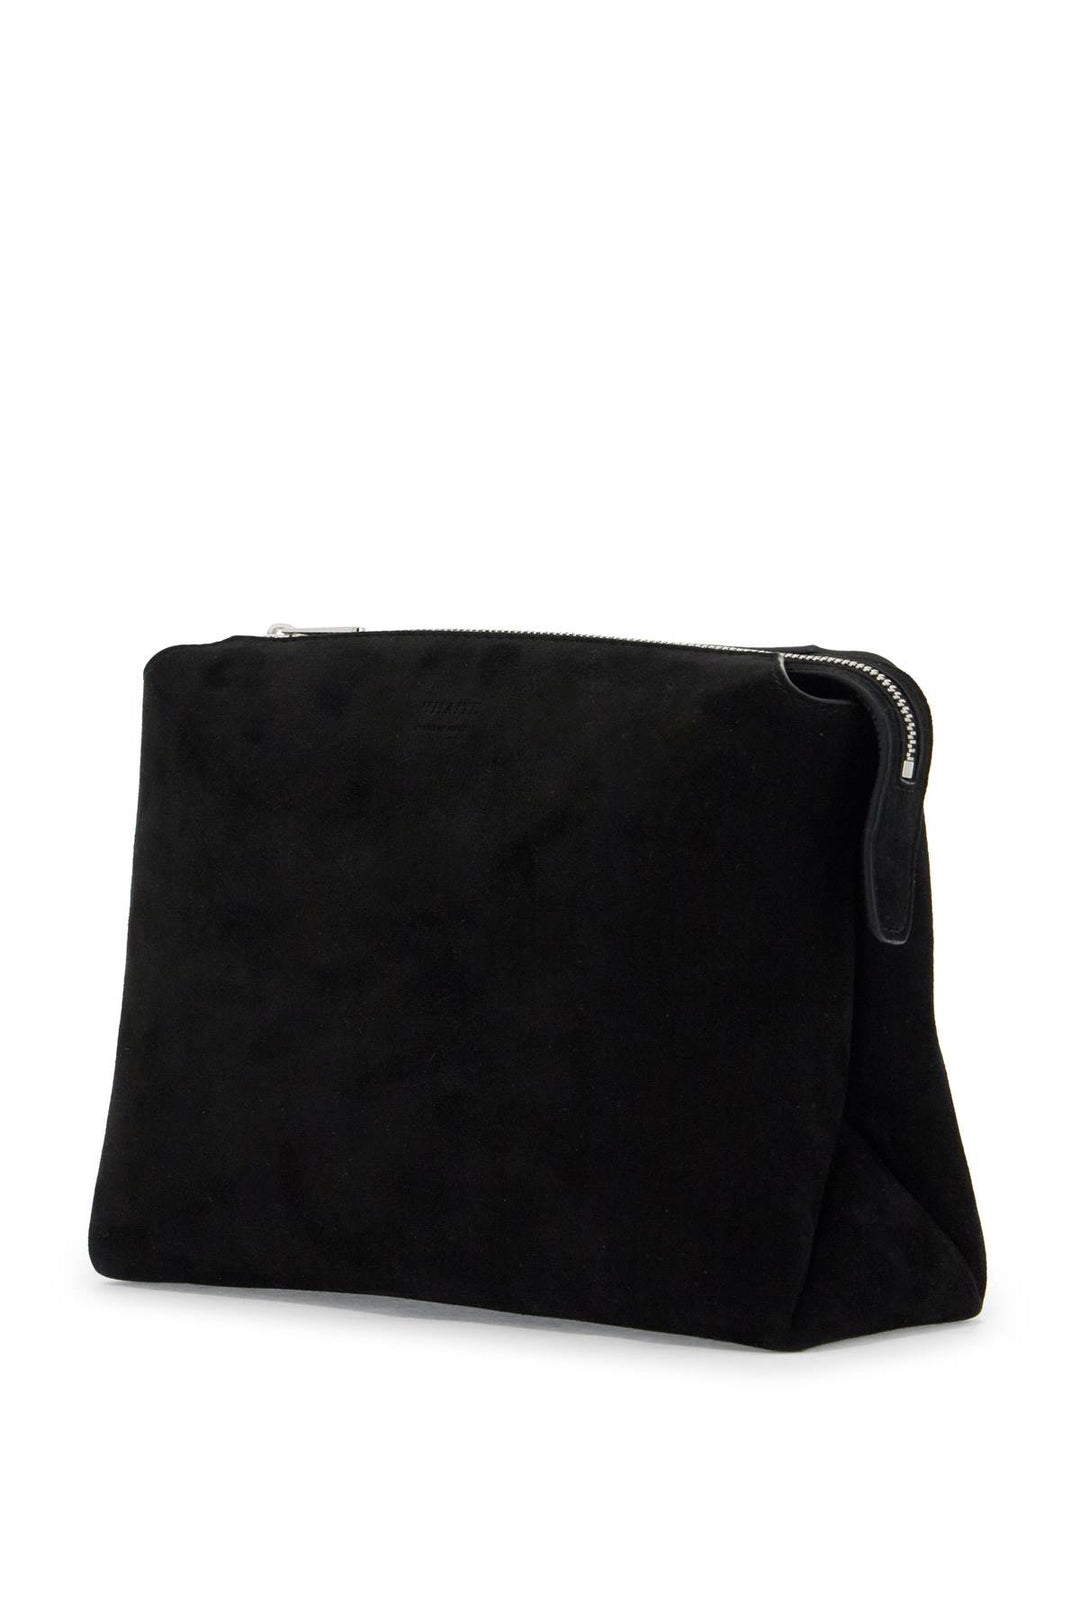 Khaite Suede Leather Lina Clutch Bag   Black